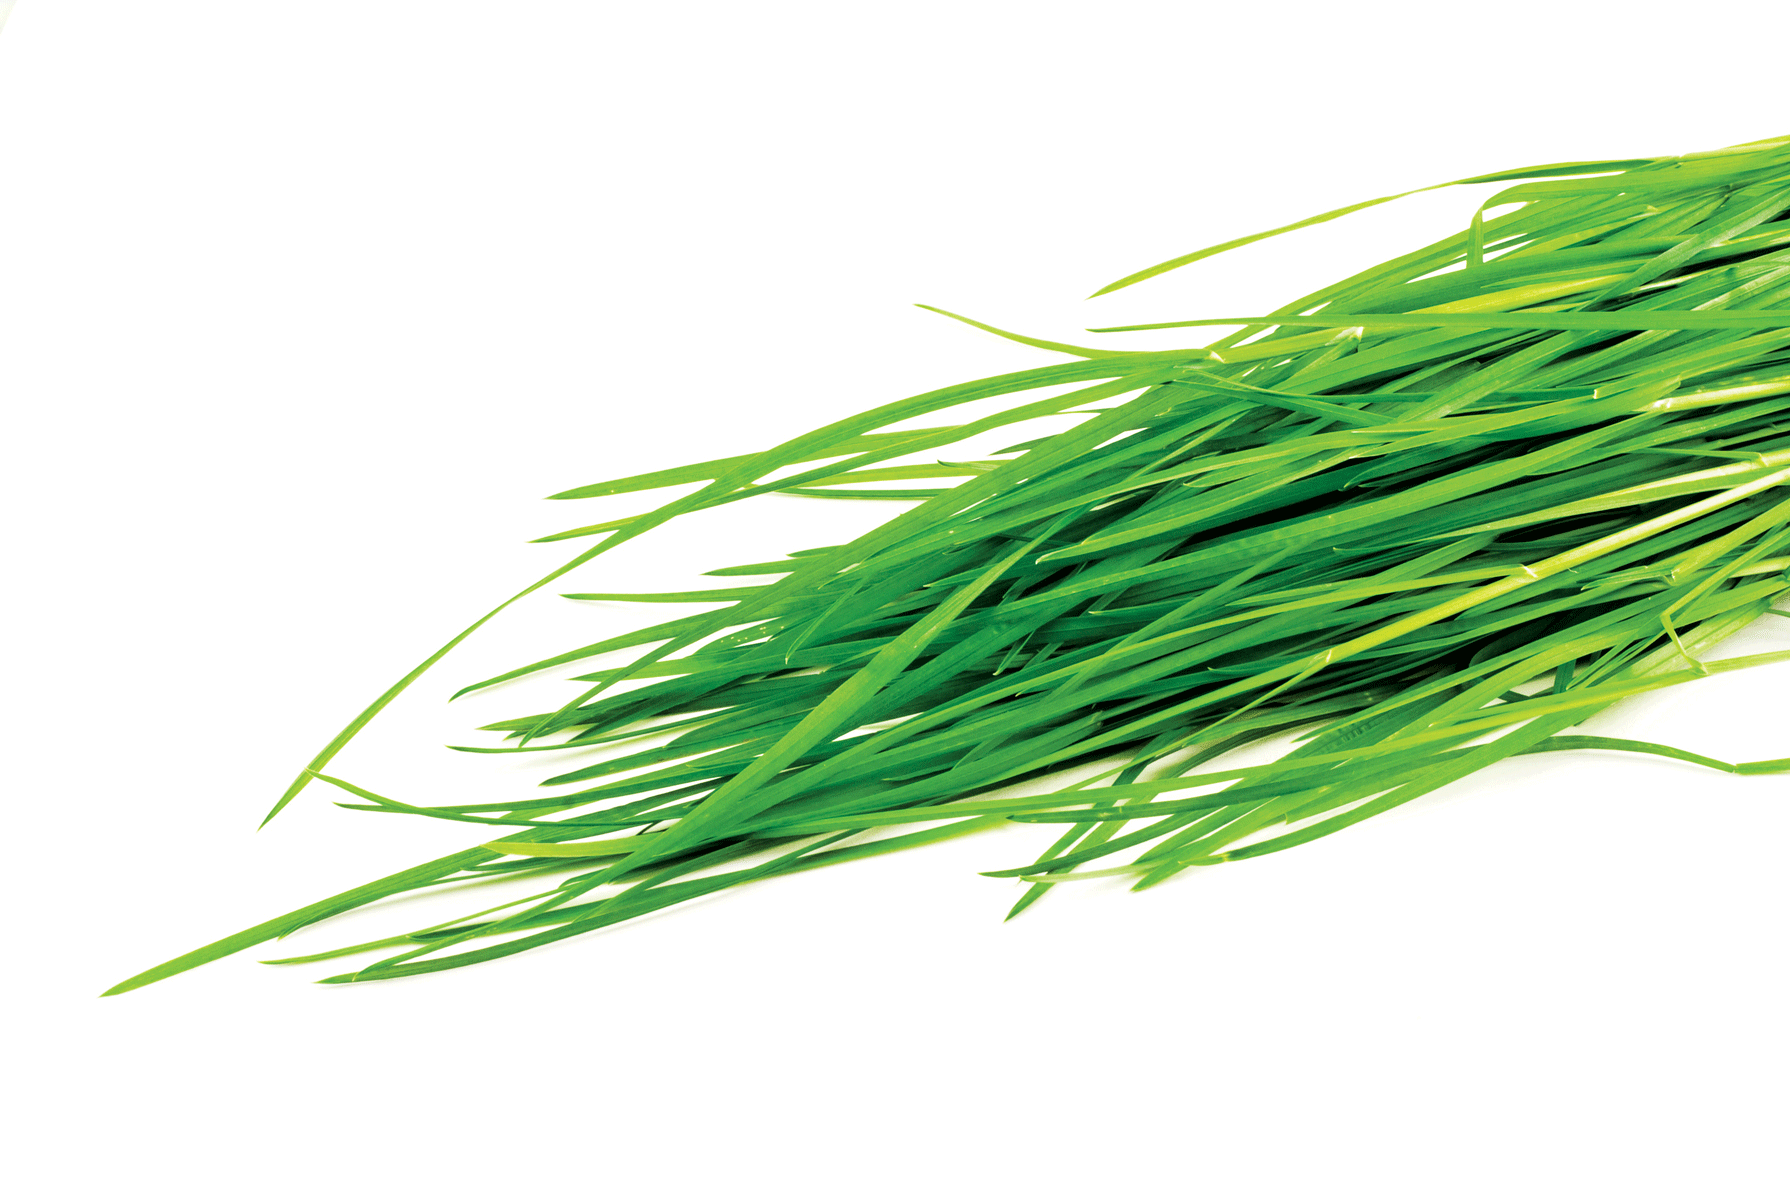 Ingredient Spotlight: Wheatgrass